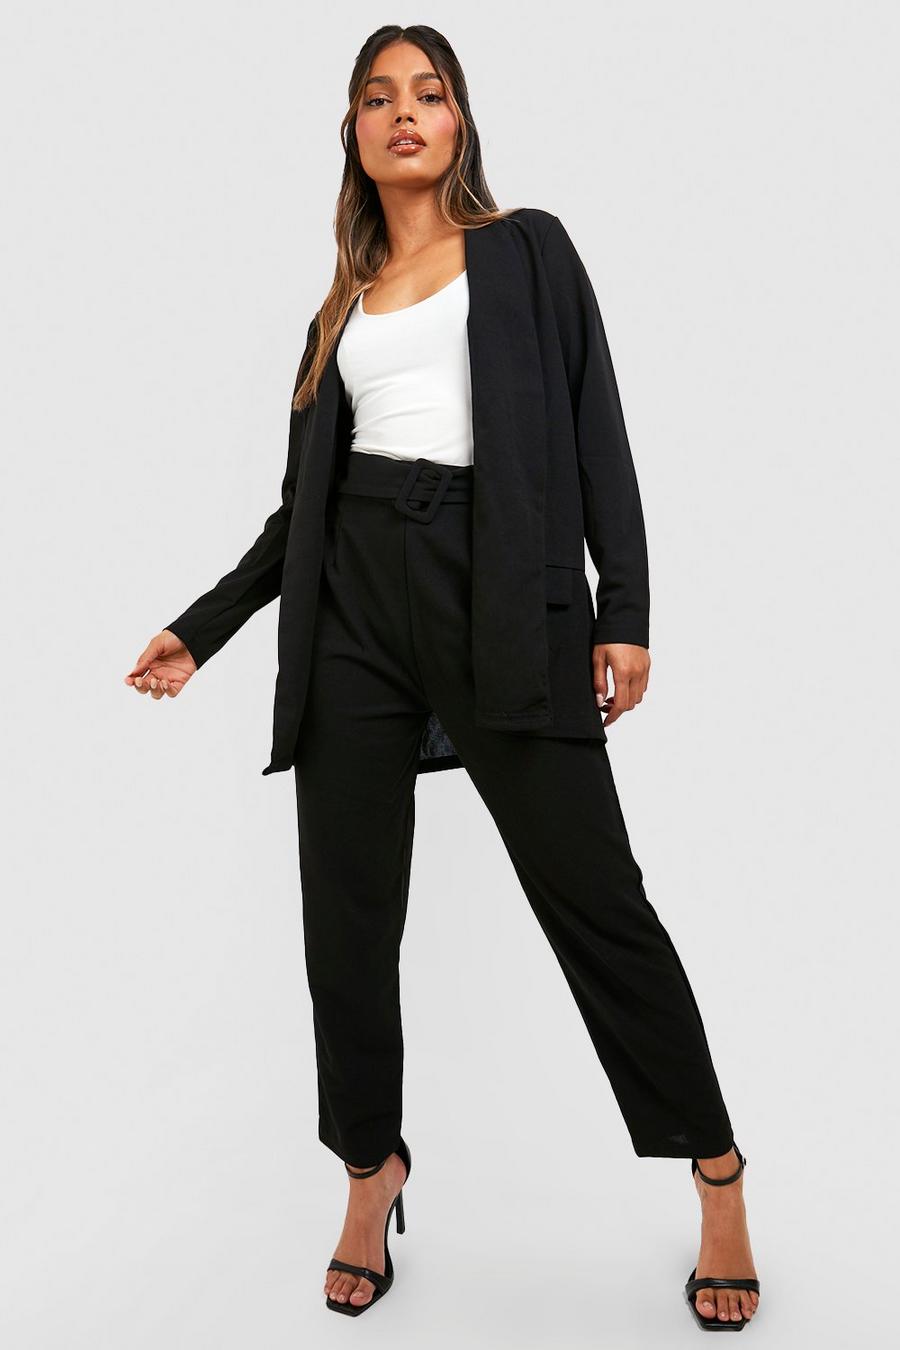 Black Tailored Blazer And Self Fabric Belt Pants Suit